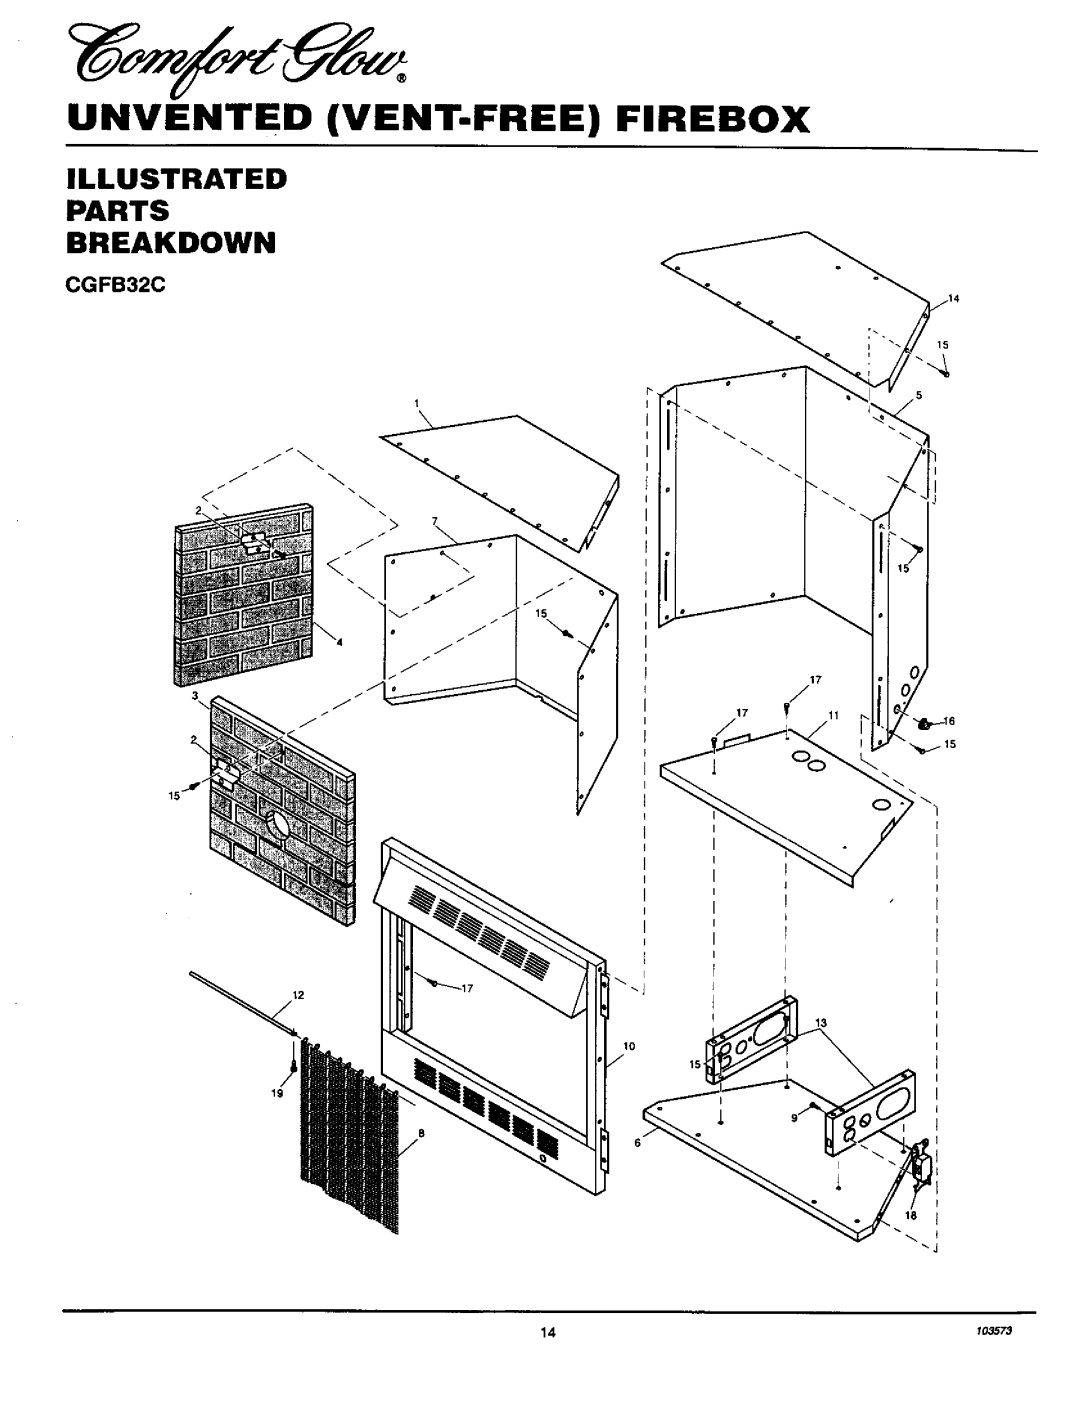 Desa Tech CGFB32NC installation manual Unvented Vent-Freefirebox, Illustrated Parts Breakdown, CGFB32C, _o5573 